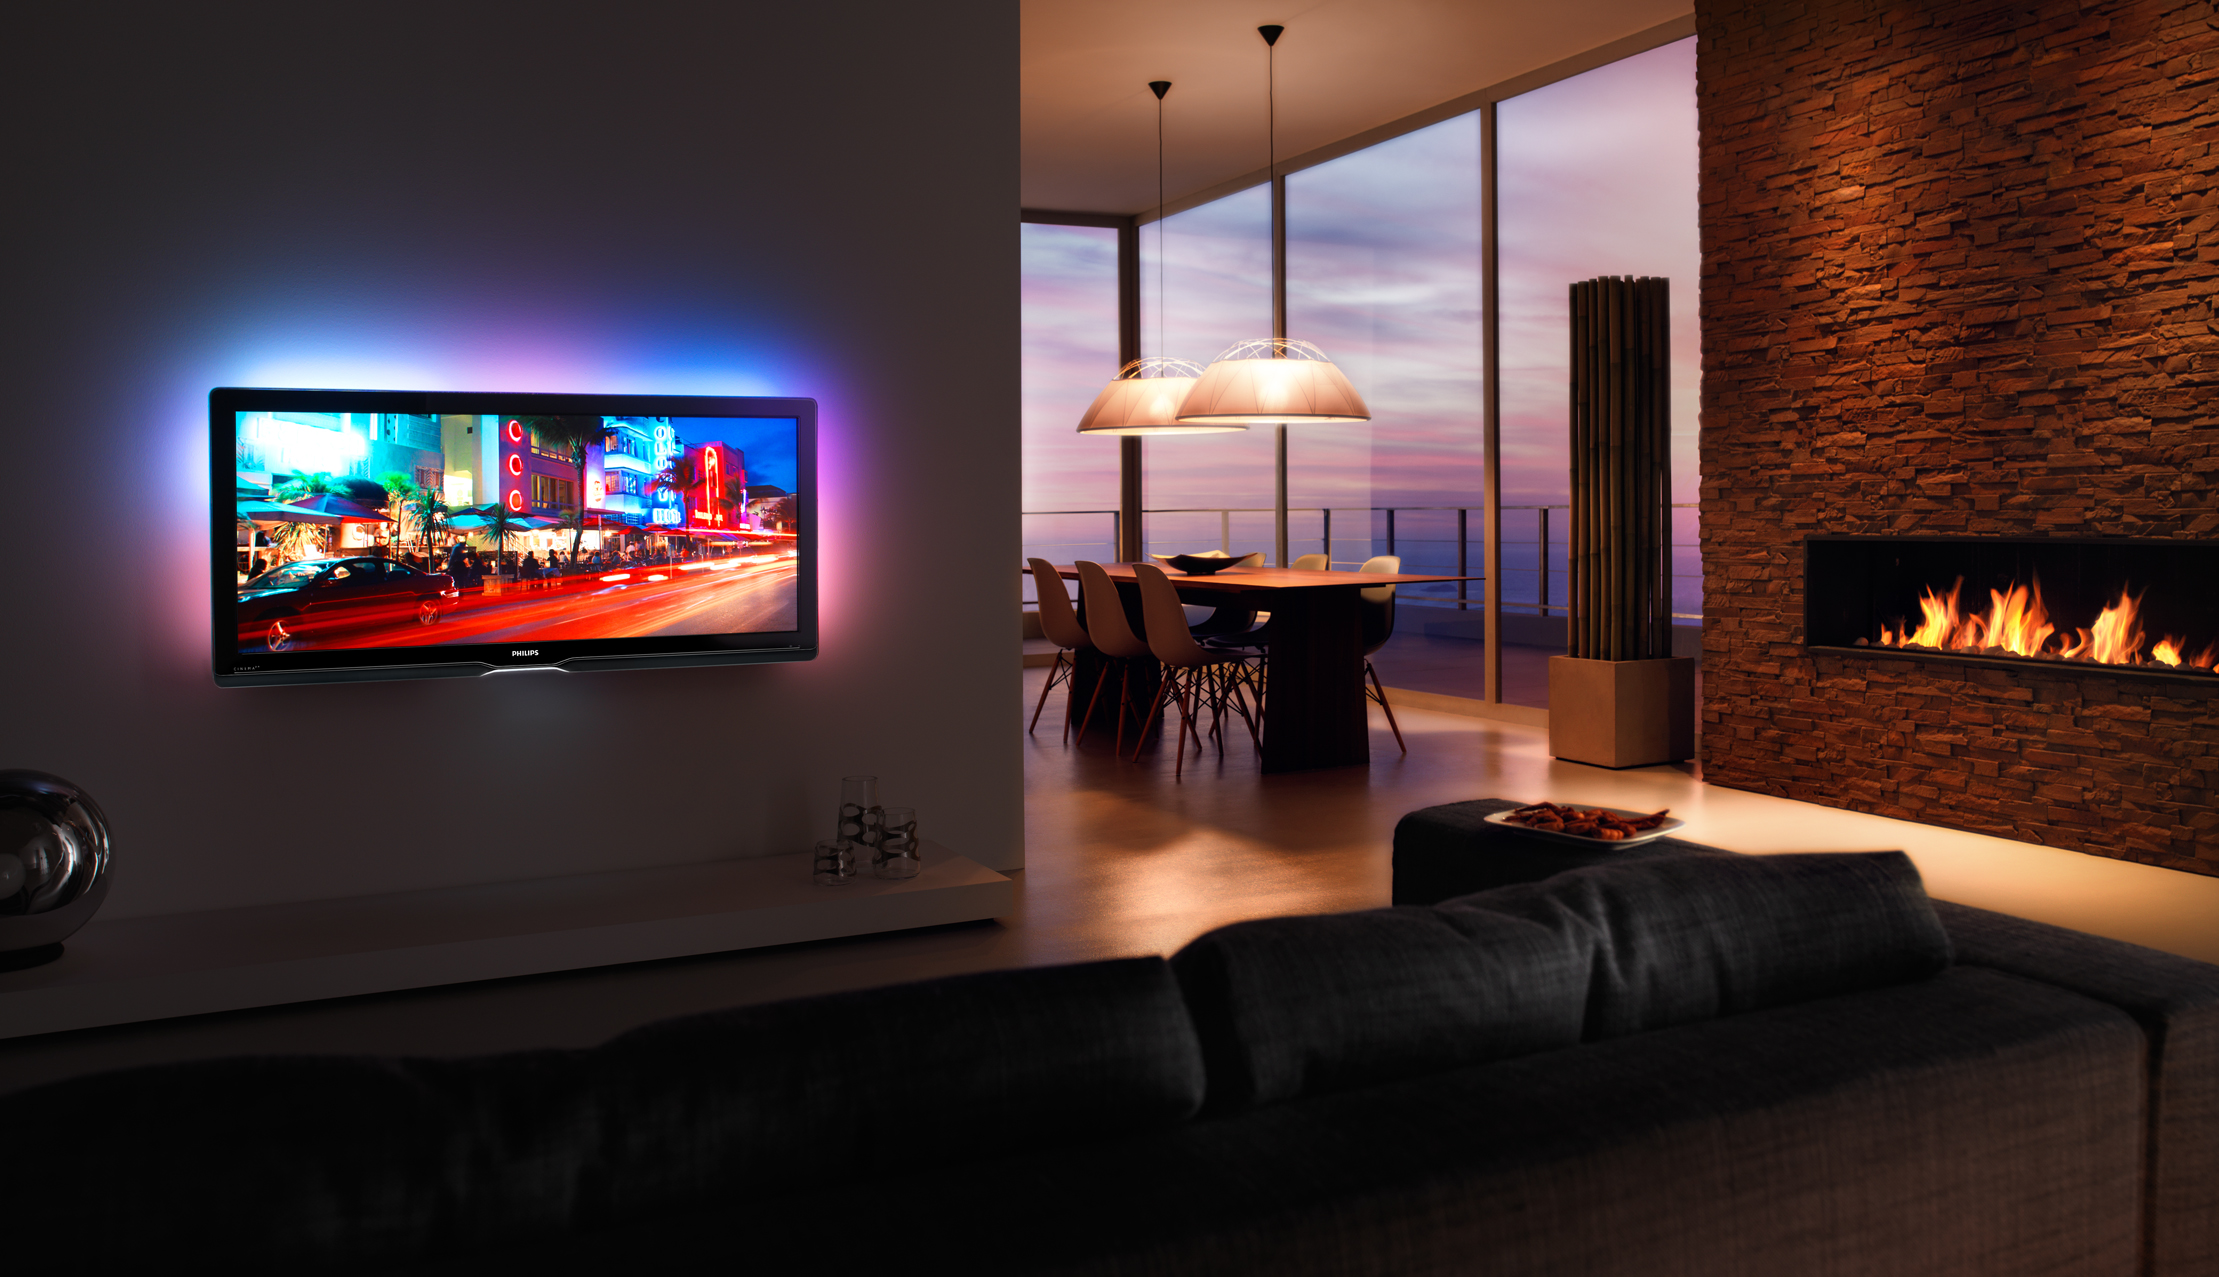 Включи телевизор в зале. Телевизор Philips Cinema 21 9 TV. Филипс плазма с подсветкой. Телевизор в интерьере. Плазменный телевизор на стене.